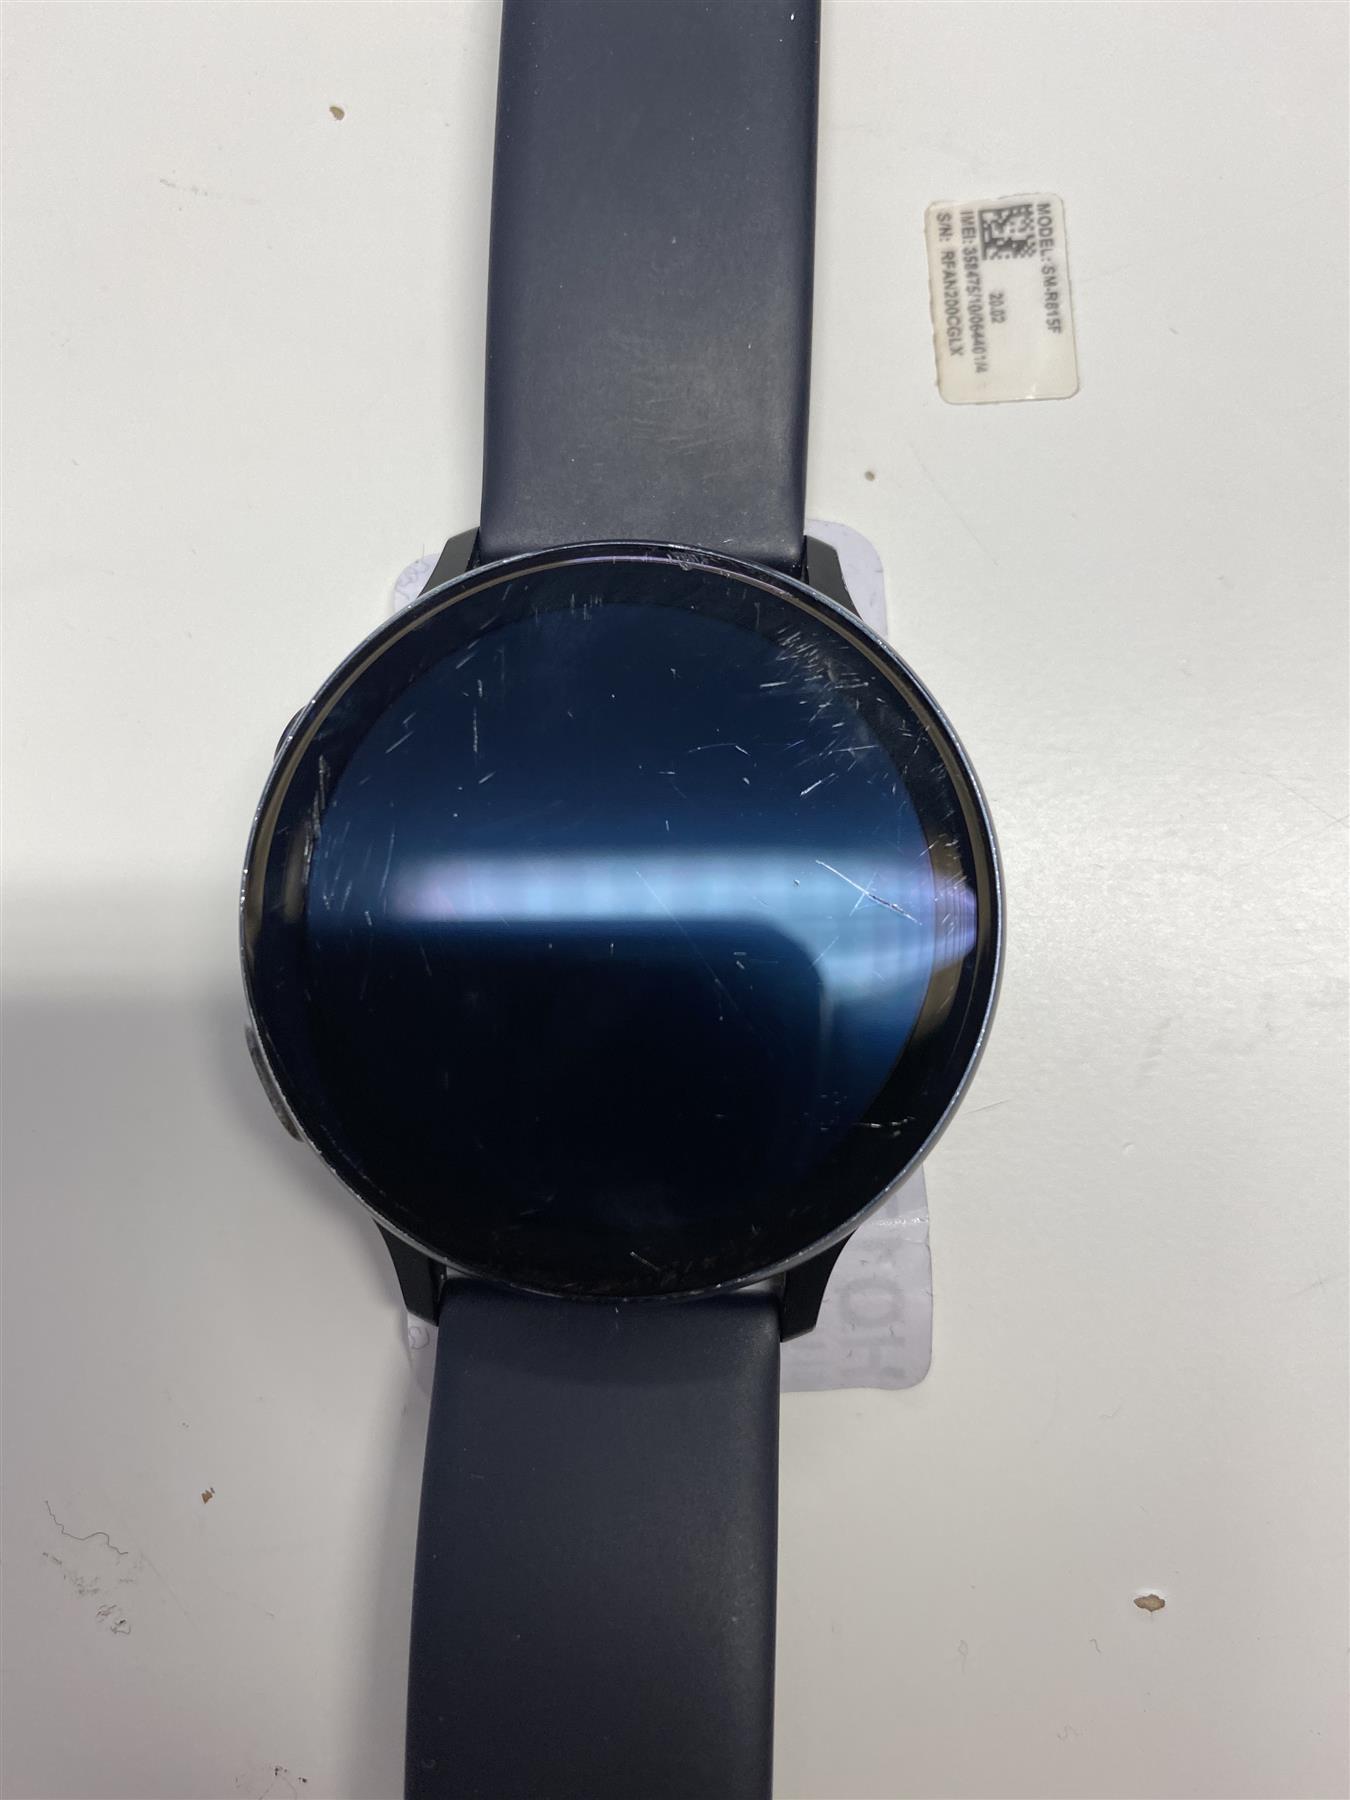 Samsung Galaxy Watch Active 2 Aqua Black, 40mm - Used